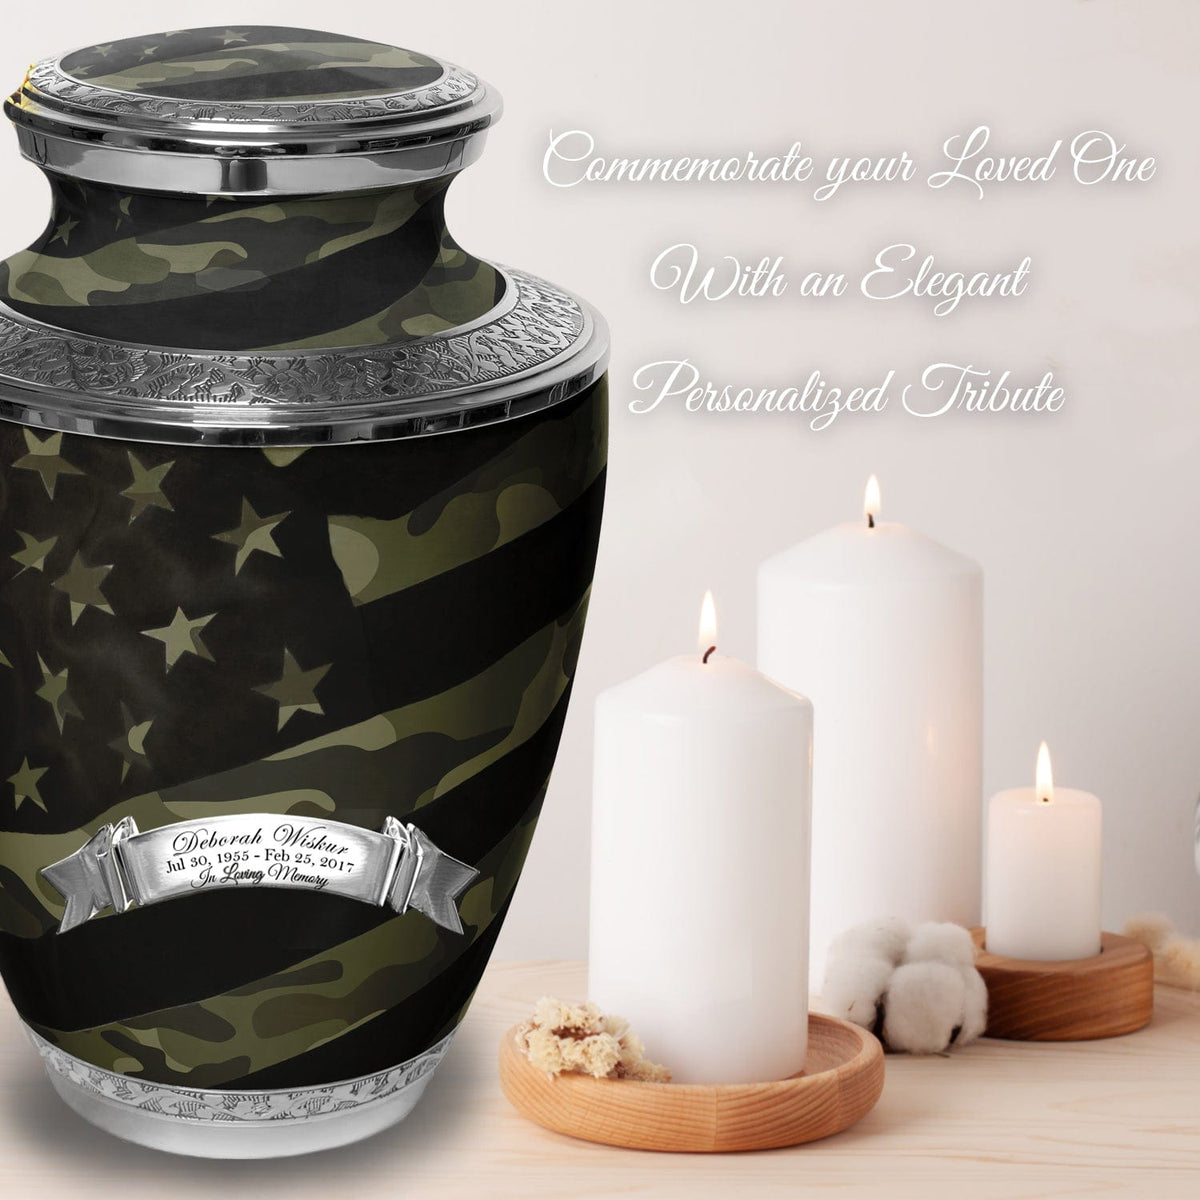 Commemorative Cremation Urns Home &amp; Garden Digital Camouflage Flag Military Cremation Urns